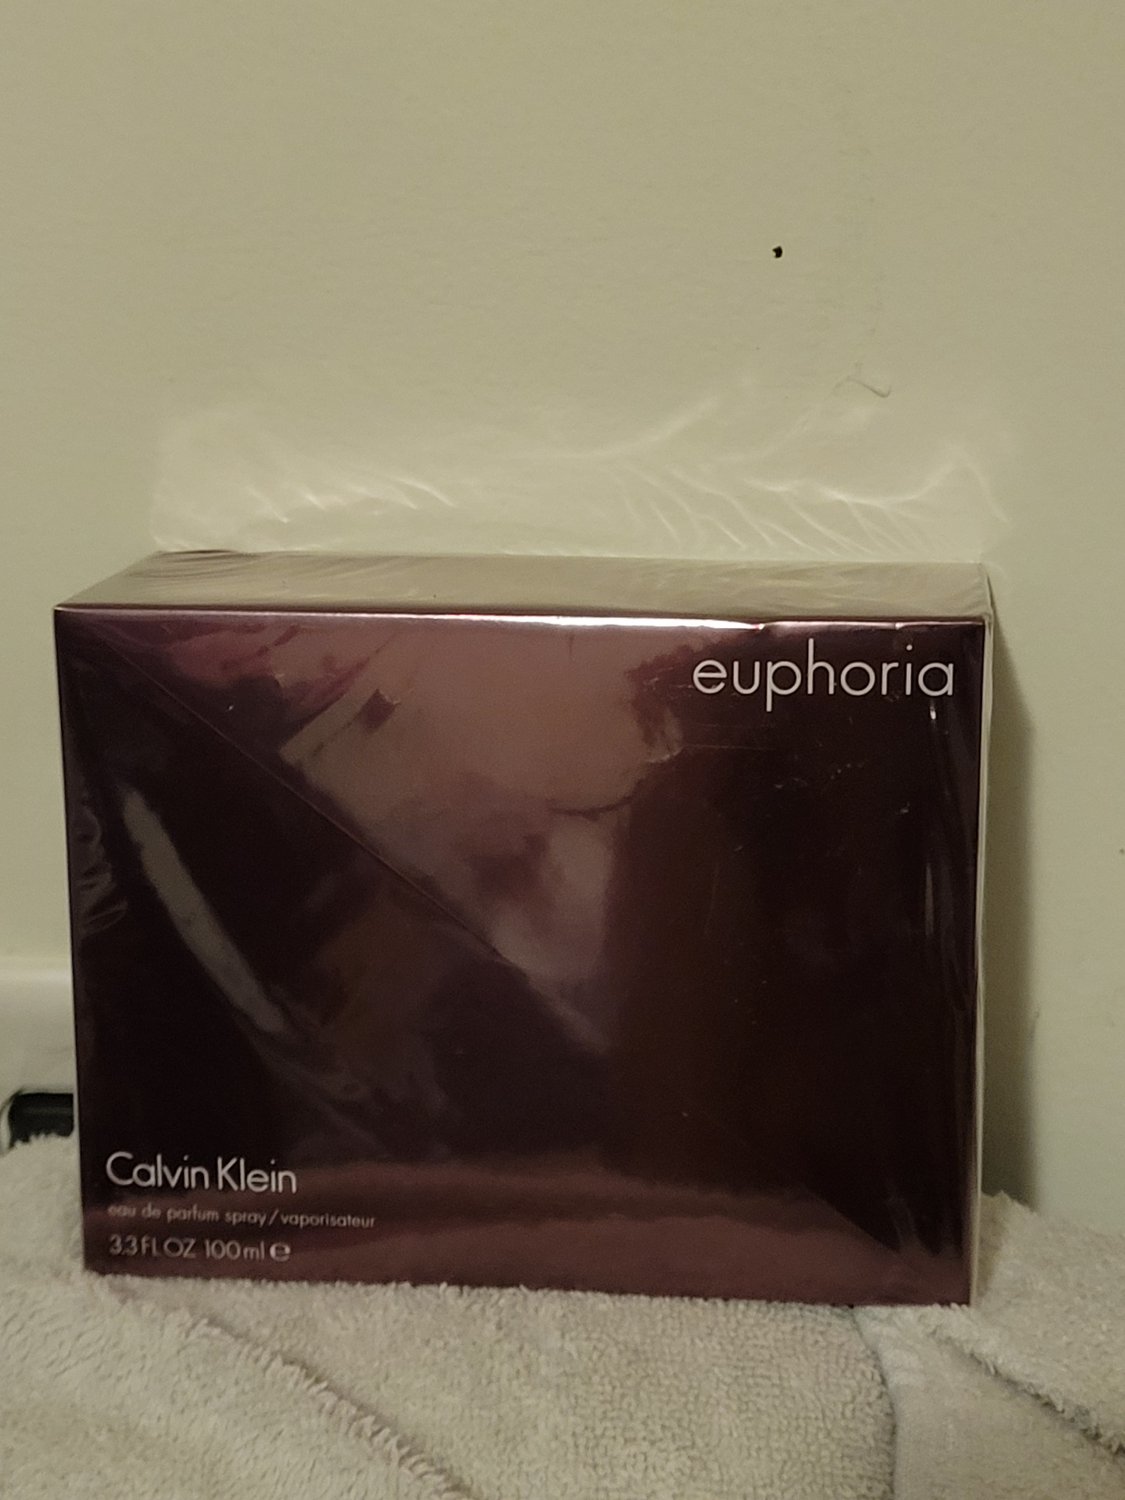 Calvin Klein Euphoria Eau De Parfum Spray / Vaporisateur